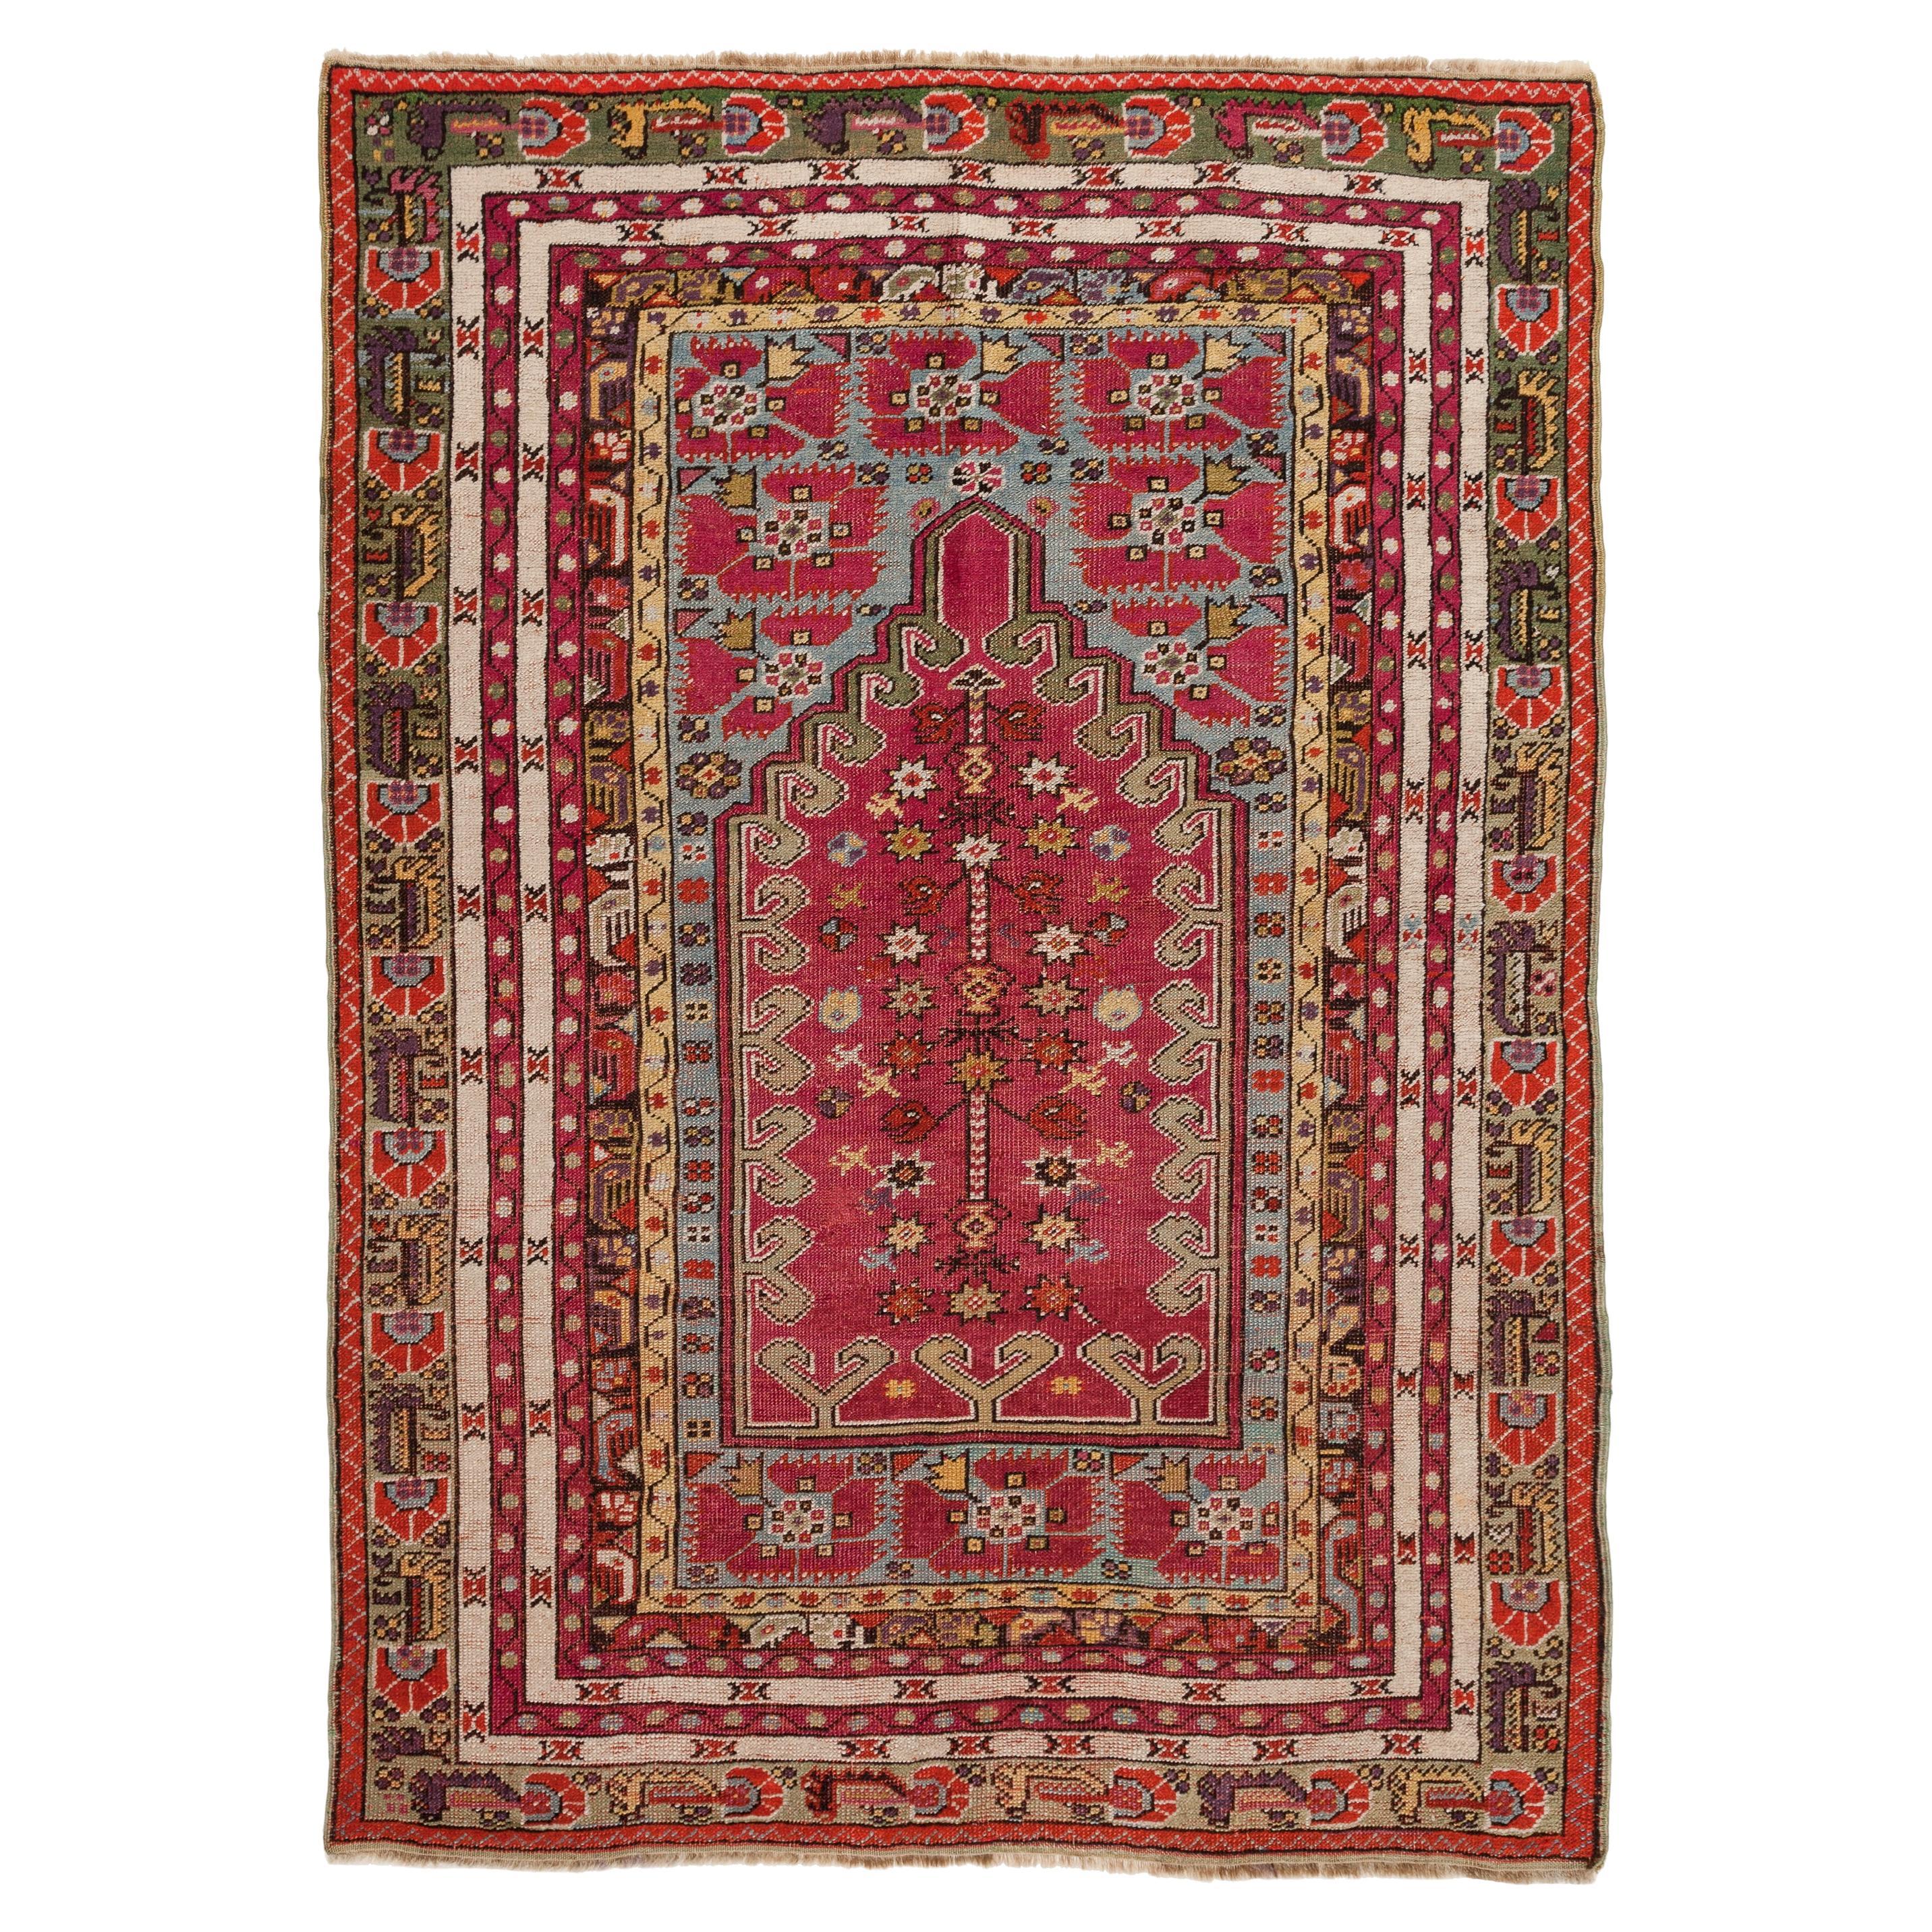 Antique Mucur 'Mudjar / Mujur' Prayer Rug, Turkish Central Anatolian Carpet